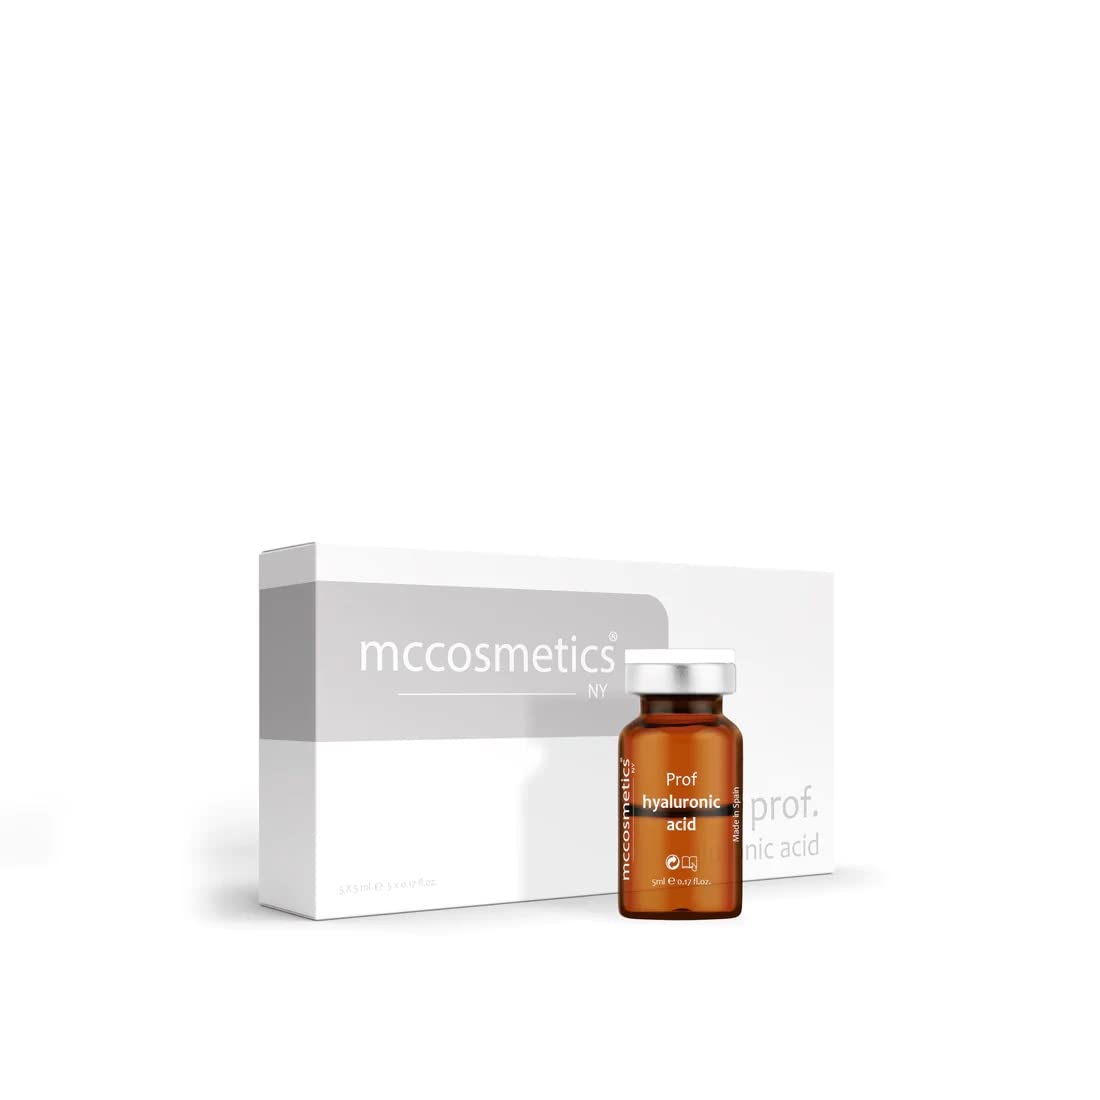 MCCosmetics NY | Prof. Hyaluronic Acid | Sodium Hyaluronate 3,5% | 5 x 5ml vials | Medical Grade Cosmetics | Made in Spain